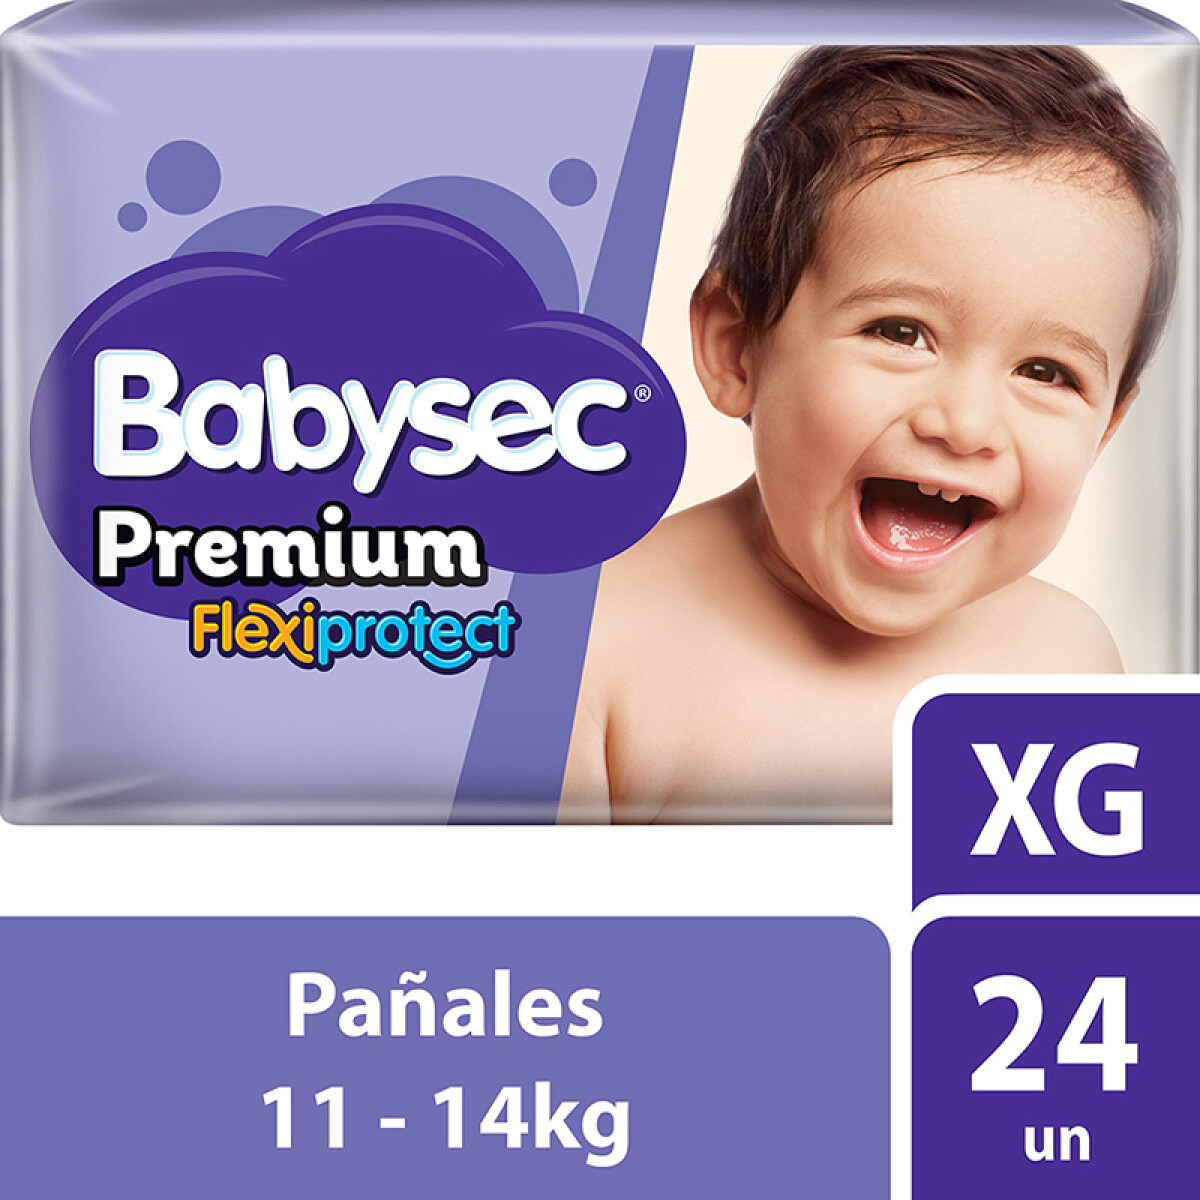 Baby Sec pañales Premium - XGx24 